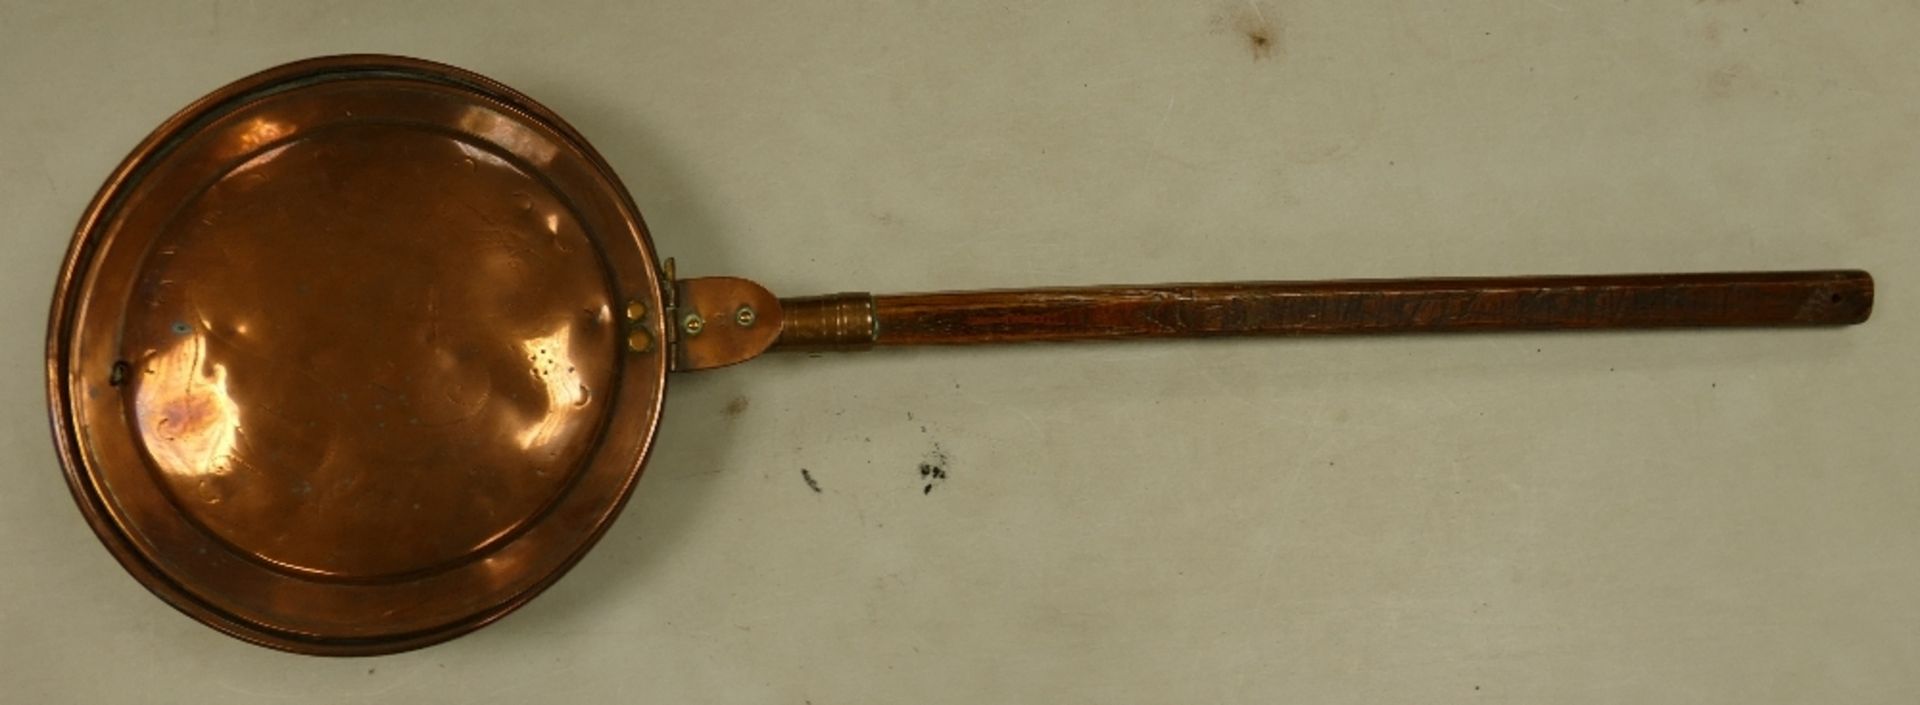 Copper bedpan, 94cm